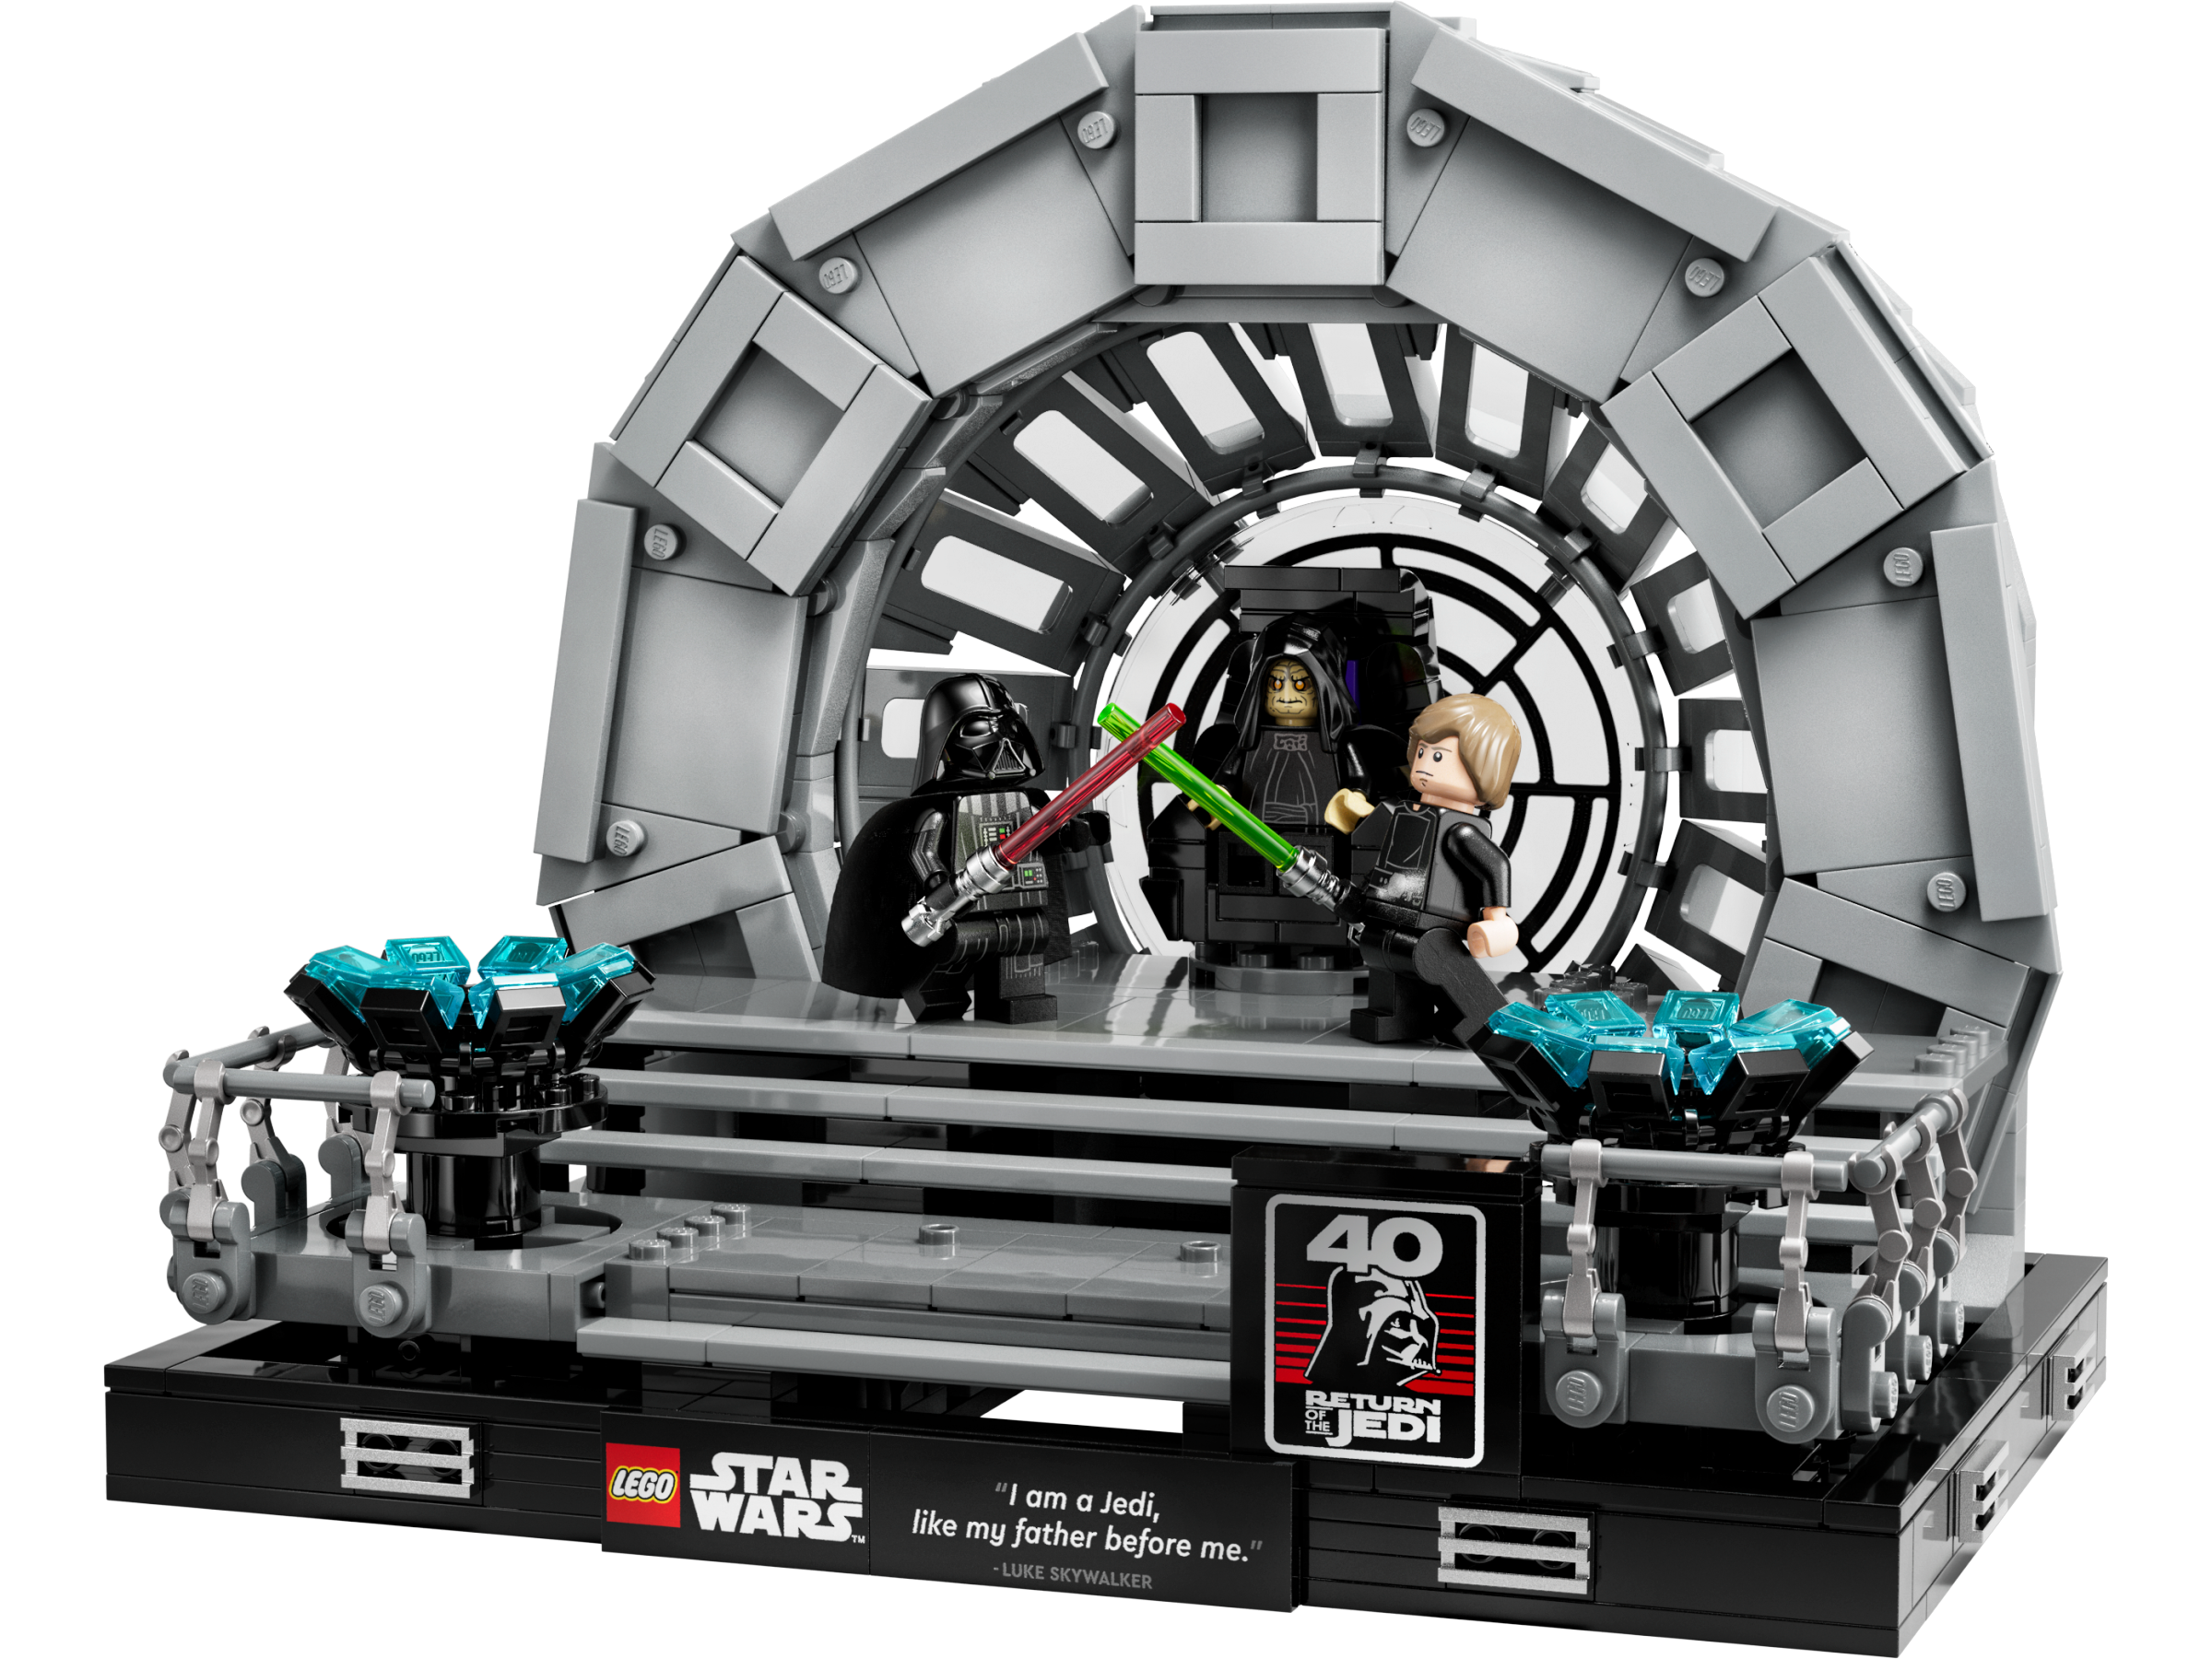 Best LEGO Star Wars sets for adult fans of the galaxy far, far